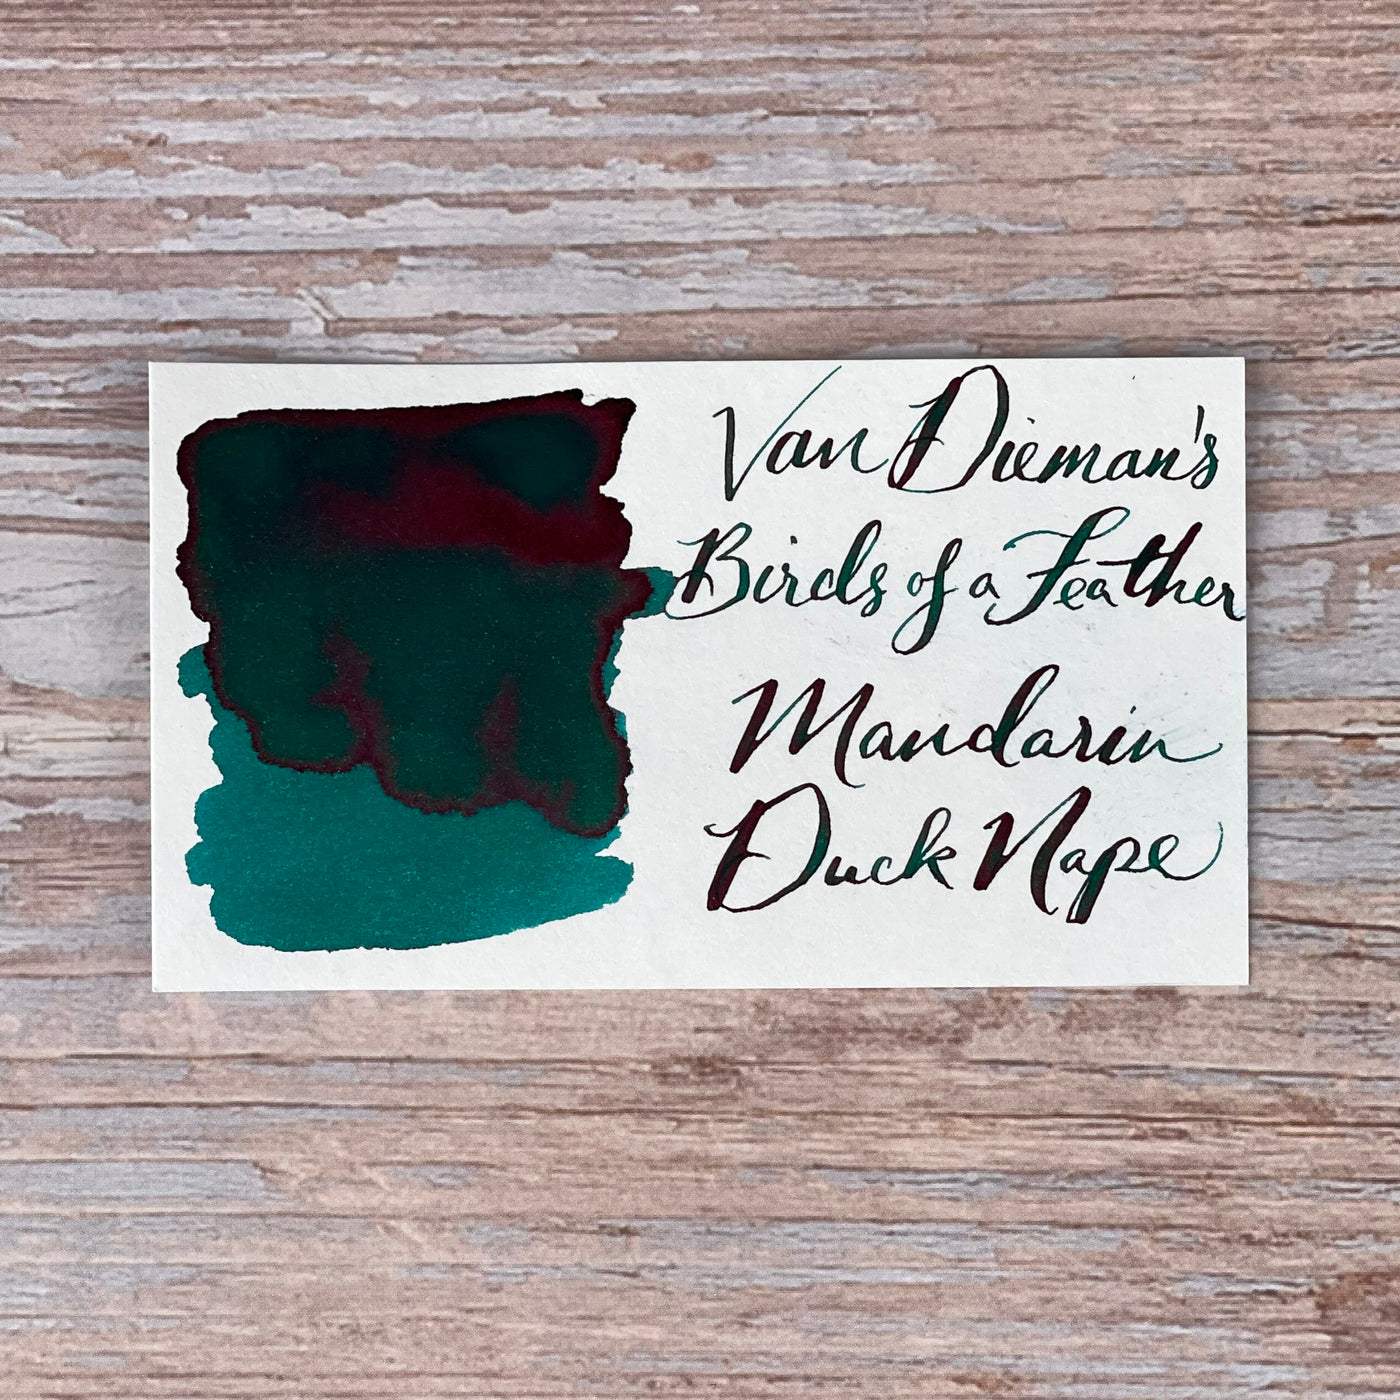 Van Dieman's Birds of a Feather - Mandarin Duck Nape - 30ml Bottled Ink